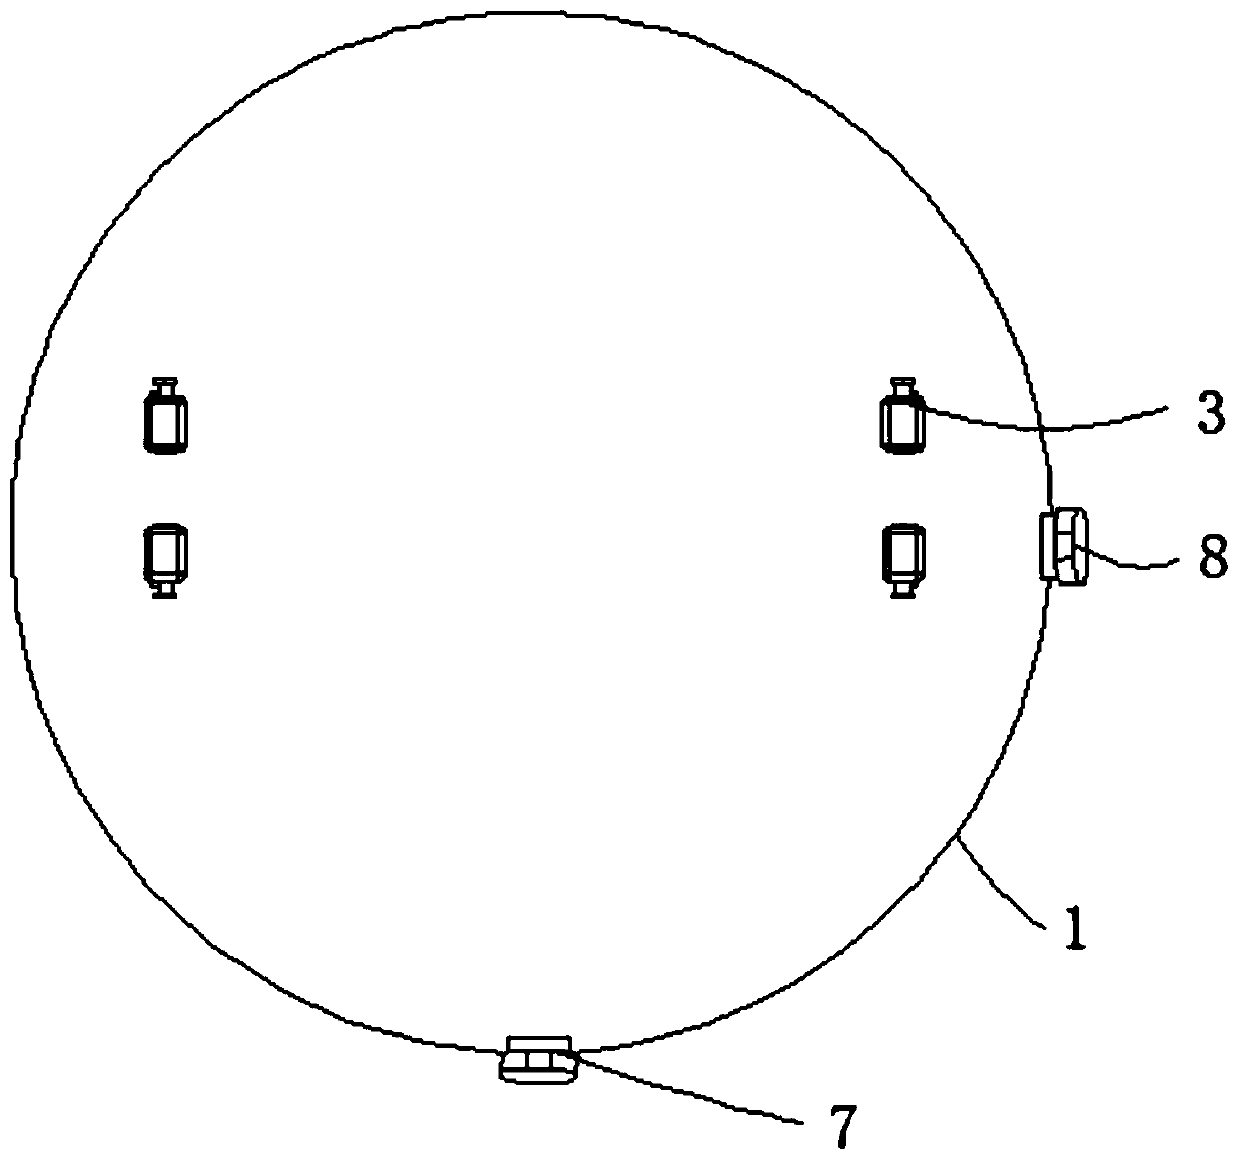 Multi-functional spherical device